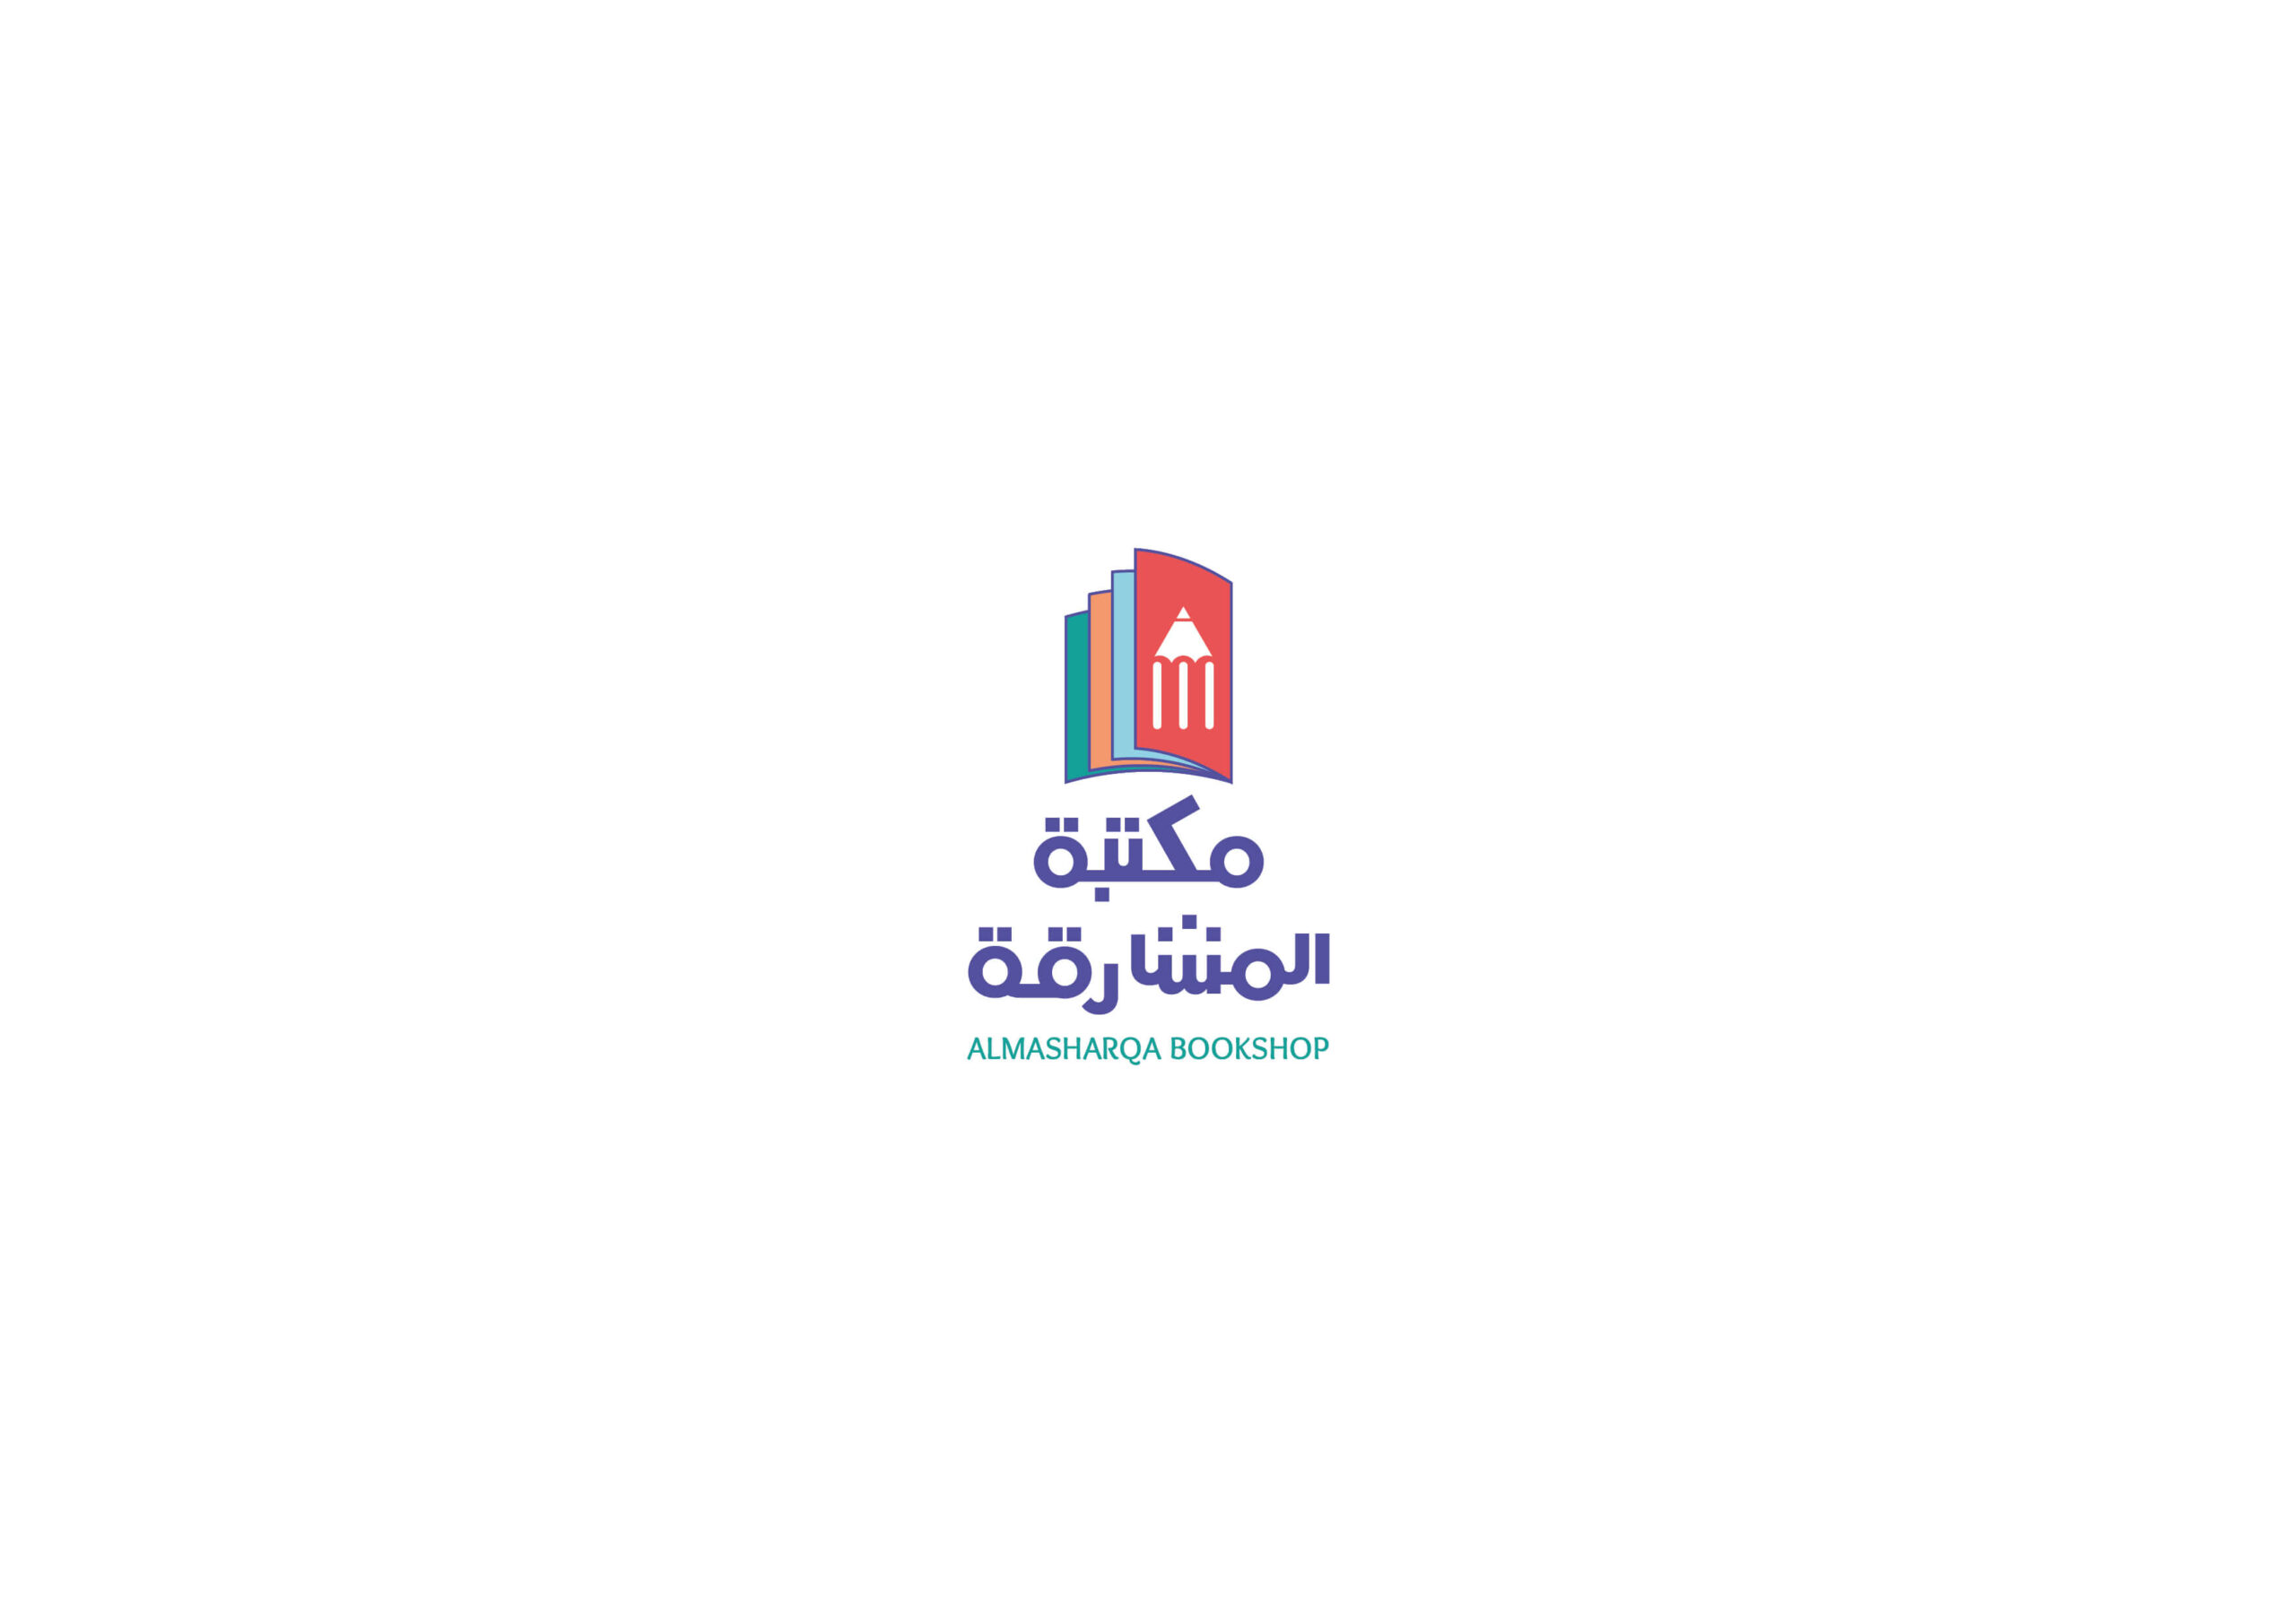 almasharqa bookshop logo 2